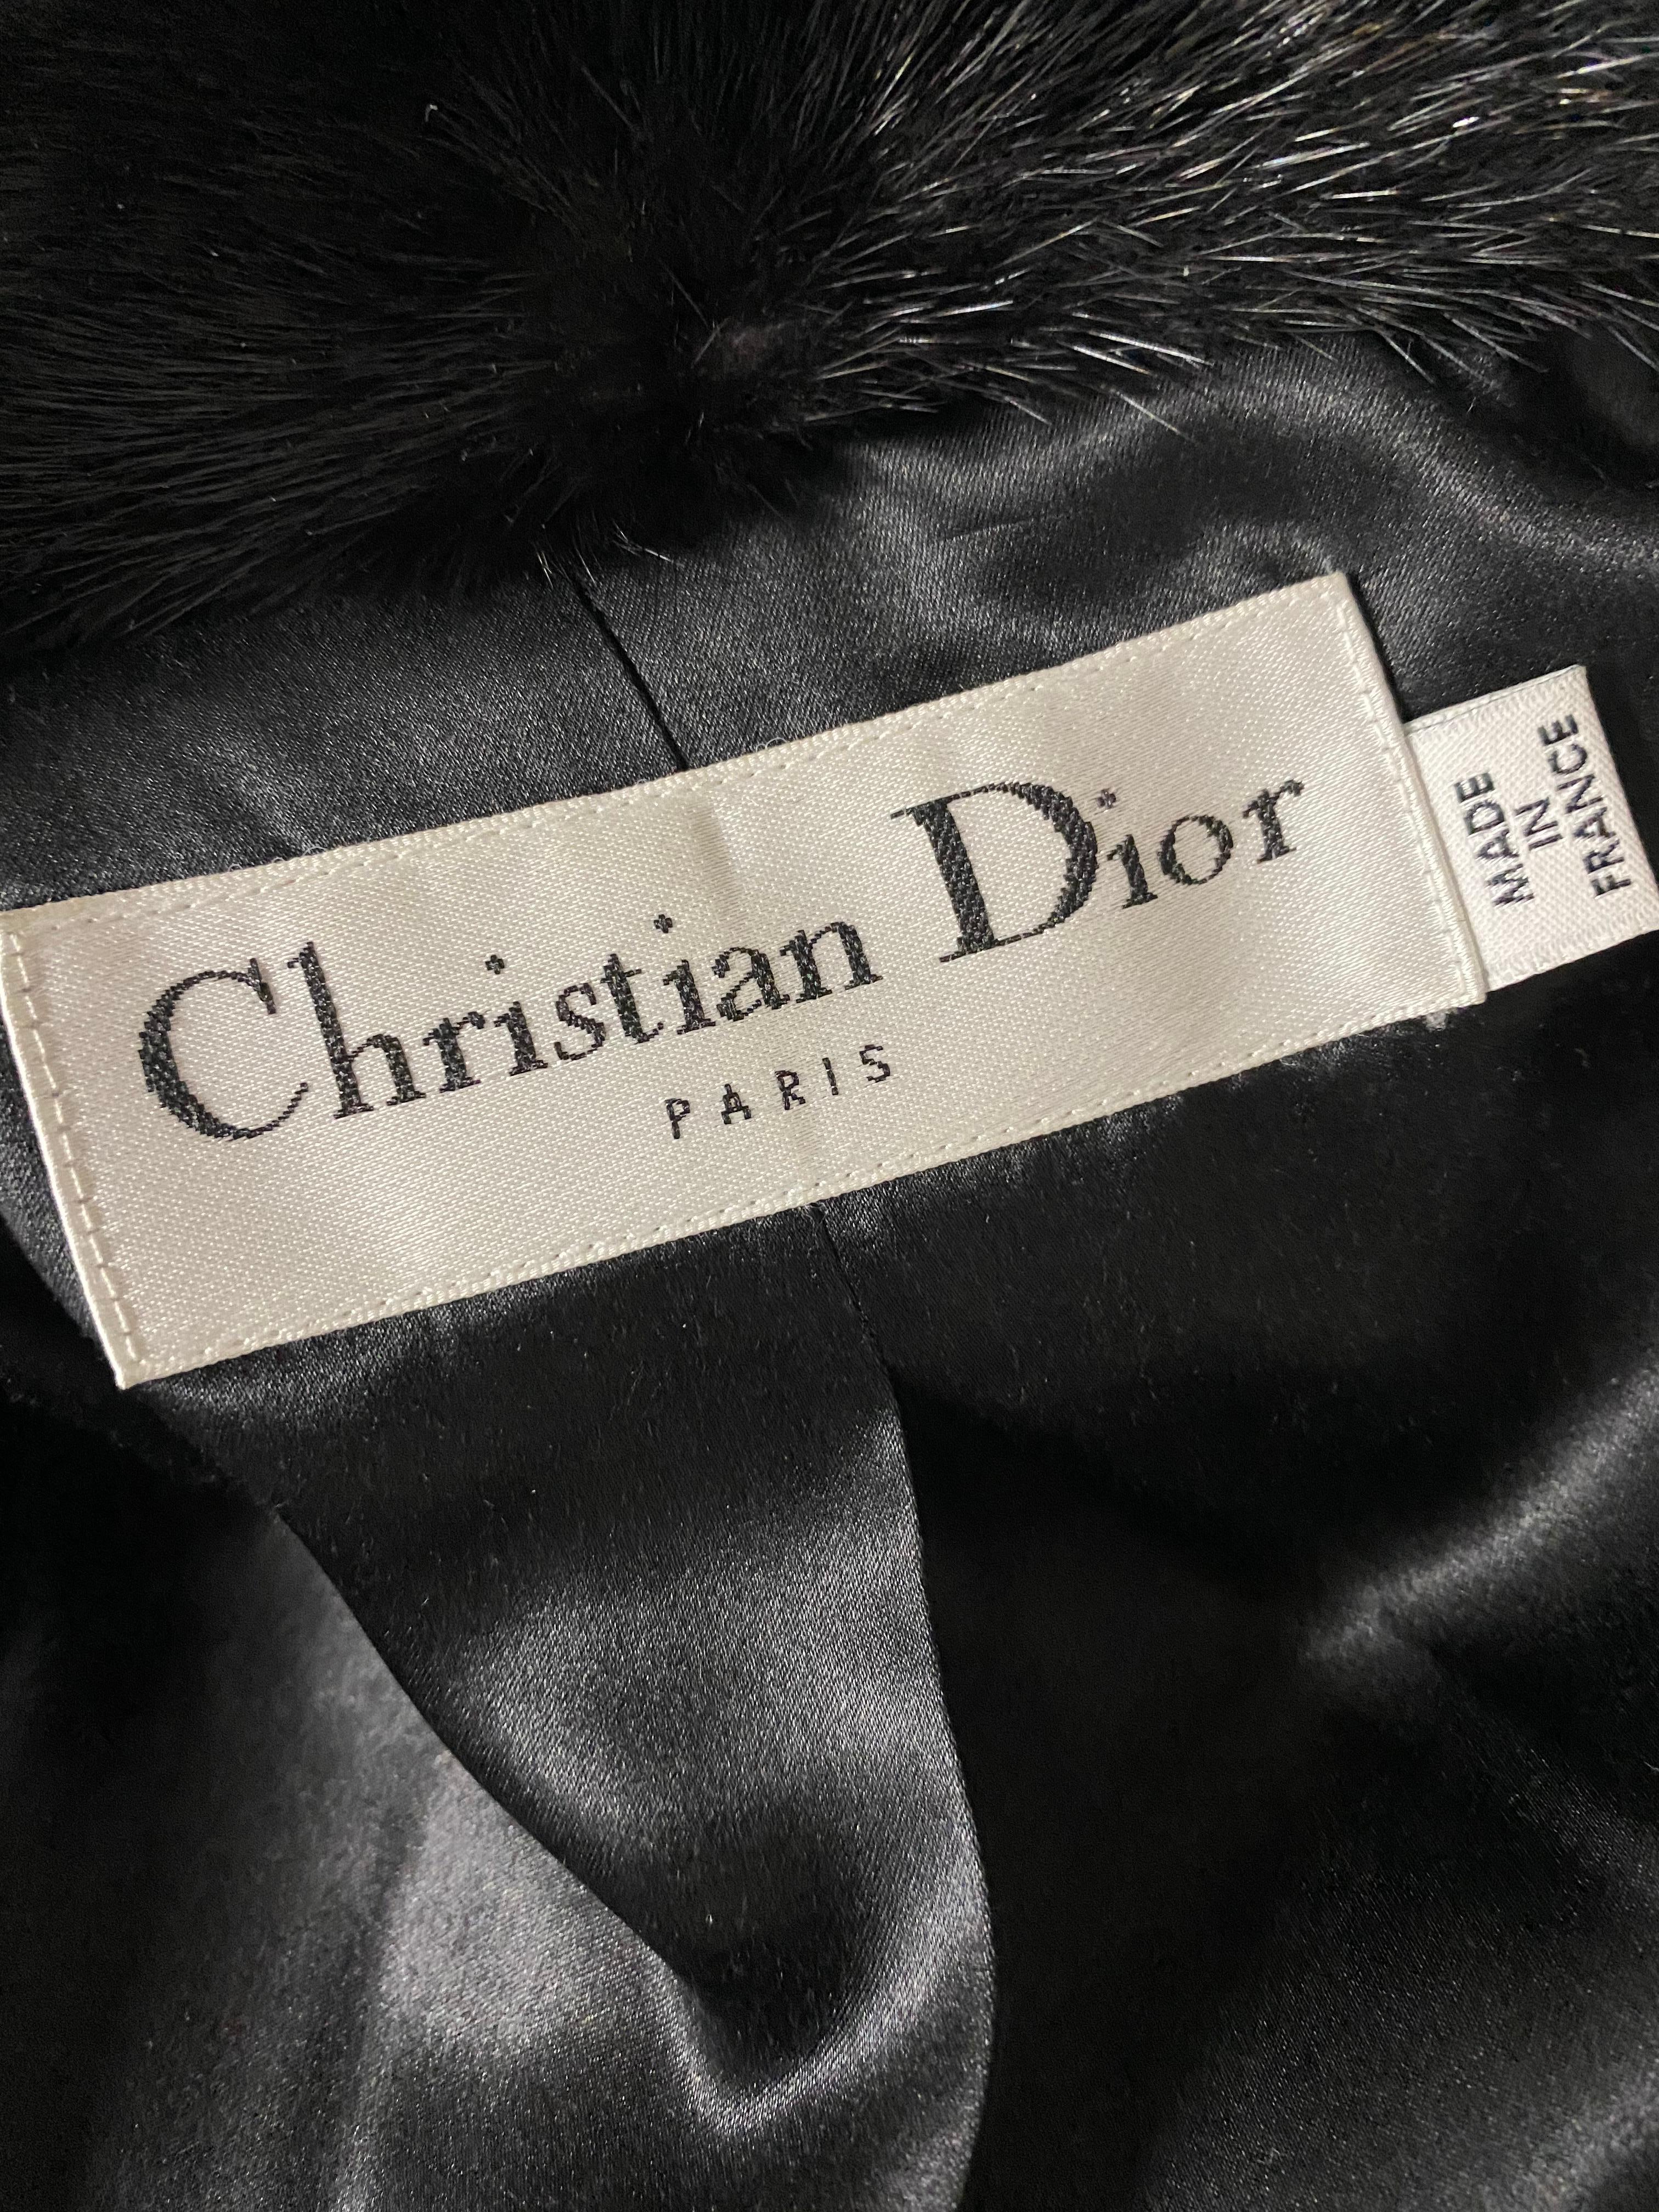 Christian Dior Black Wool Tweed and Fur Coat Jacket Size 40 5